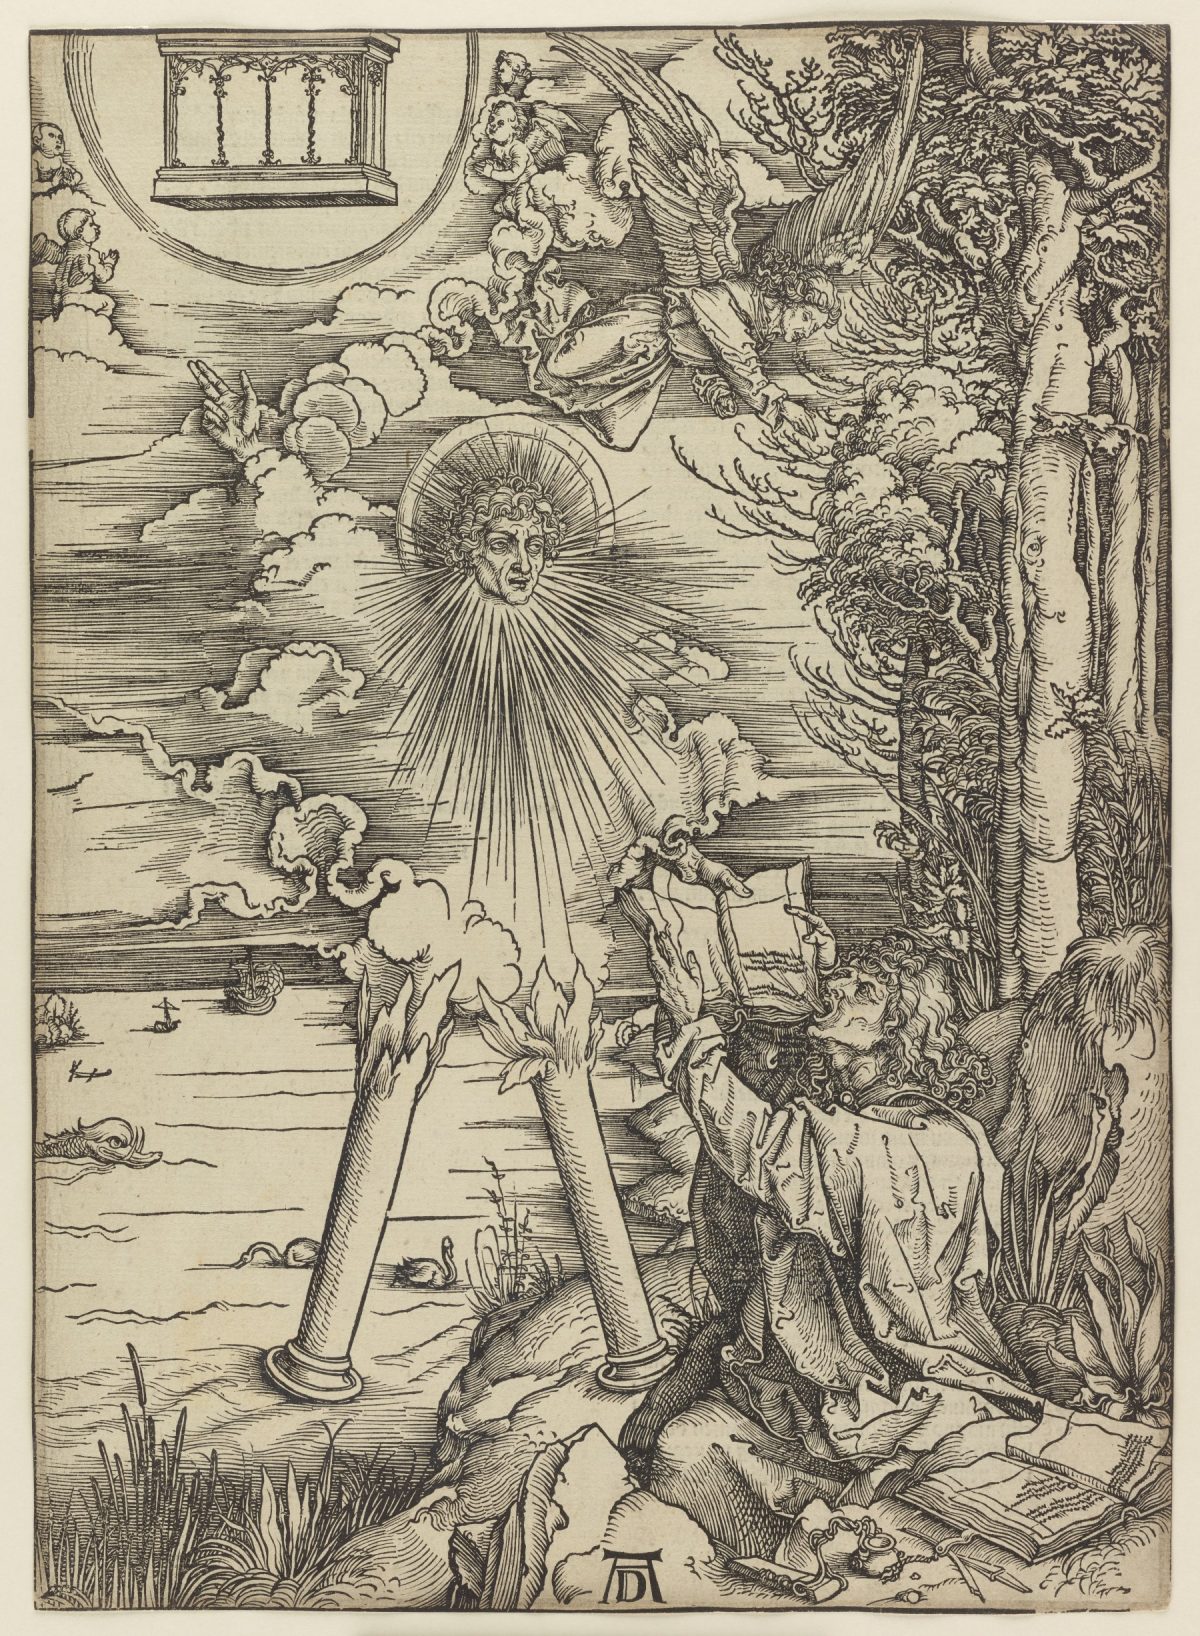 Albrecht Dürer, art, woodcuts, Apocalypse, religion, Bible